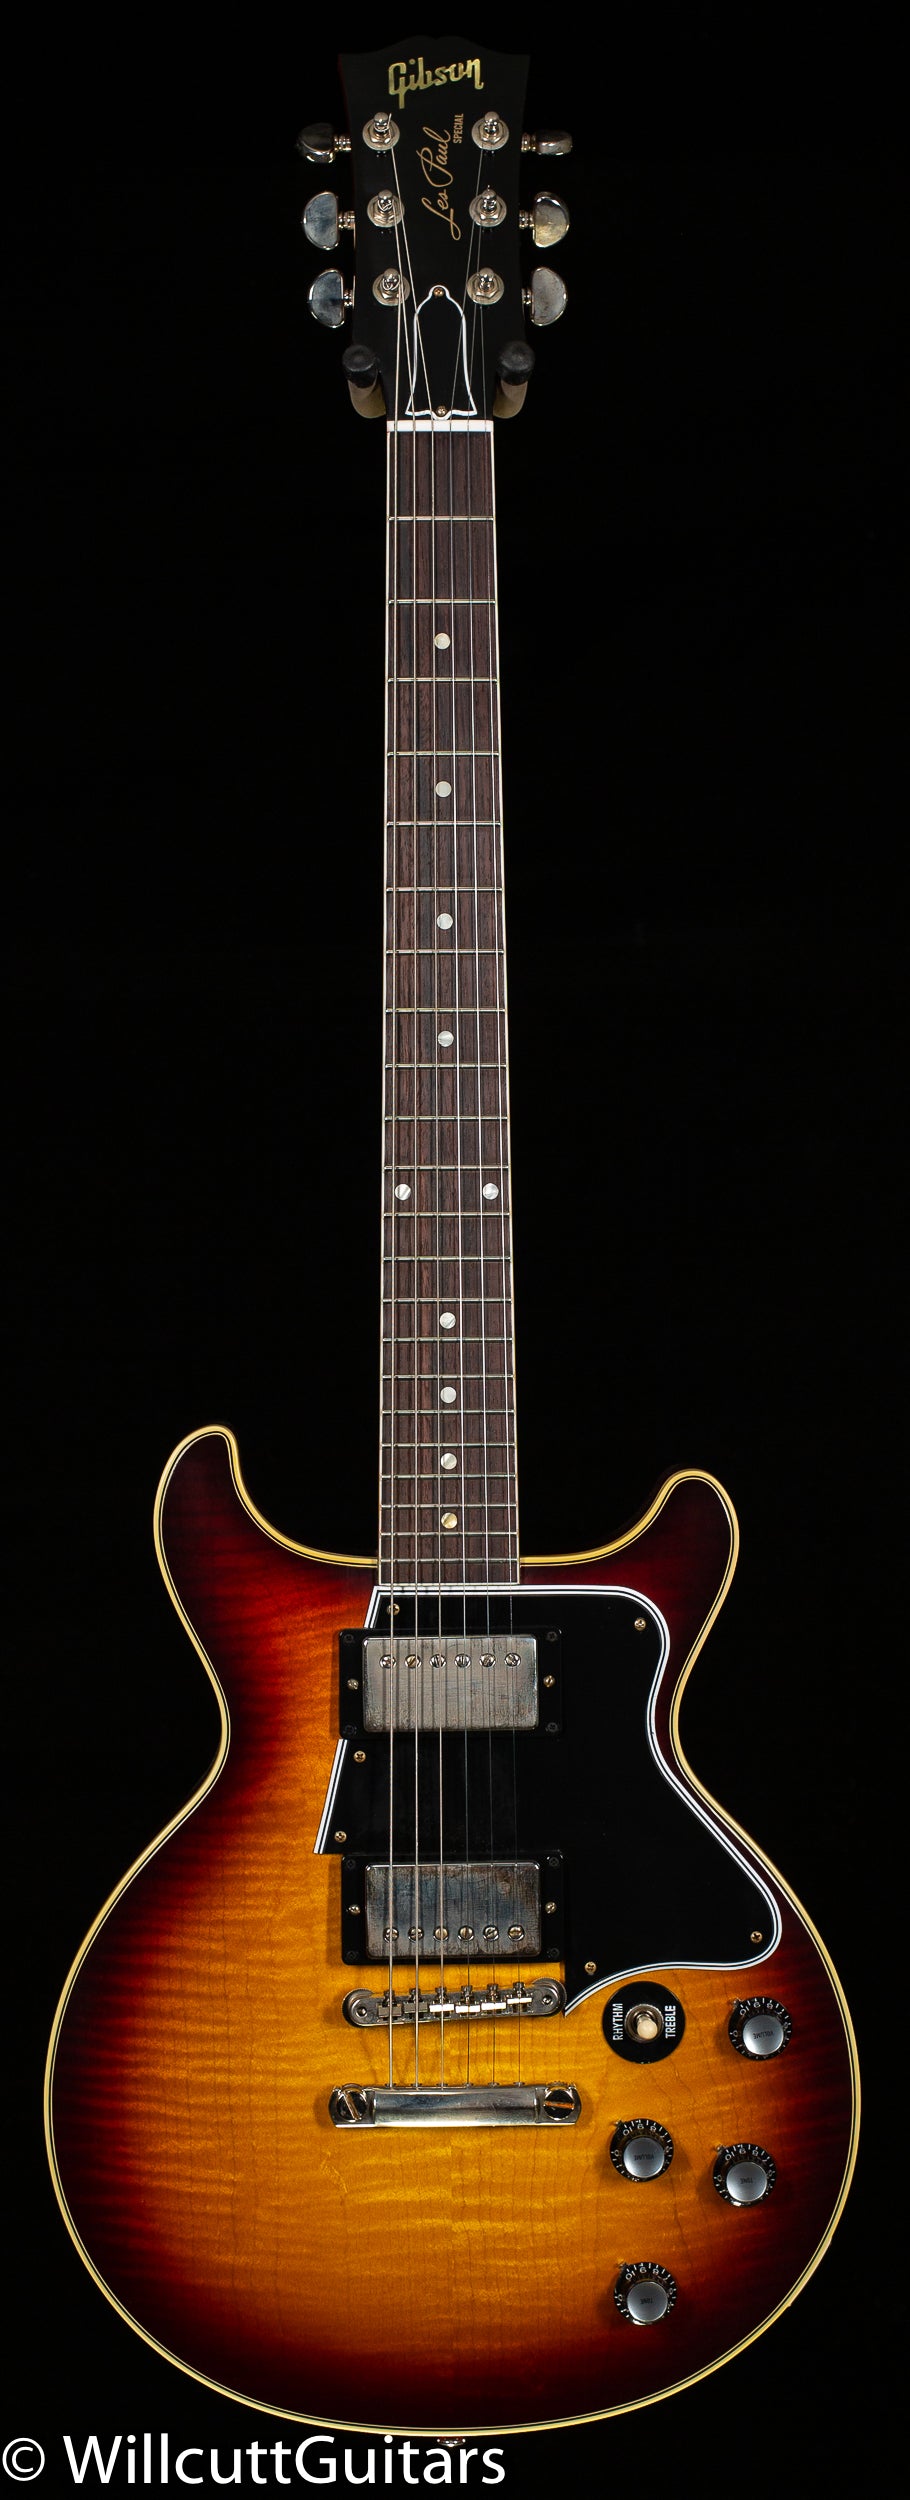 Gibson Les Paul Special Double Cut Figured Maple Top VOS Bourbon